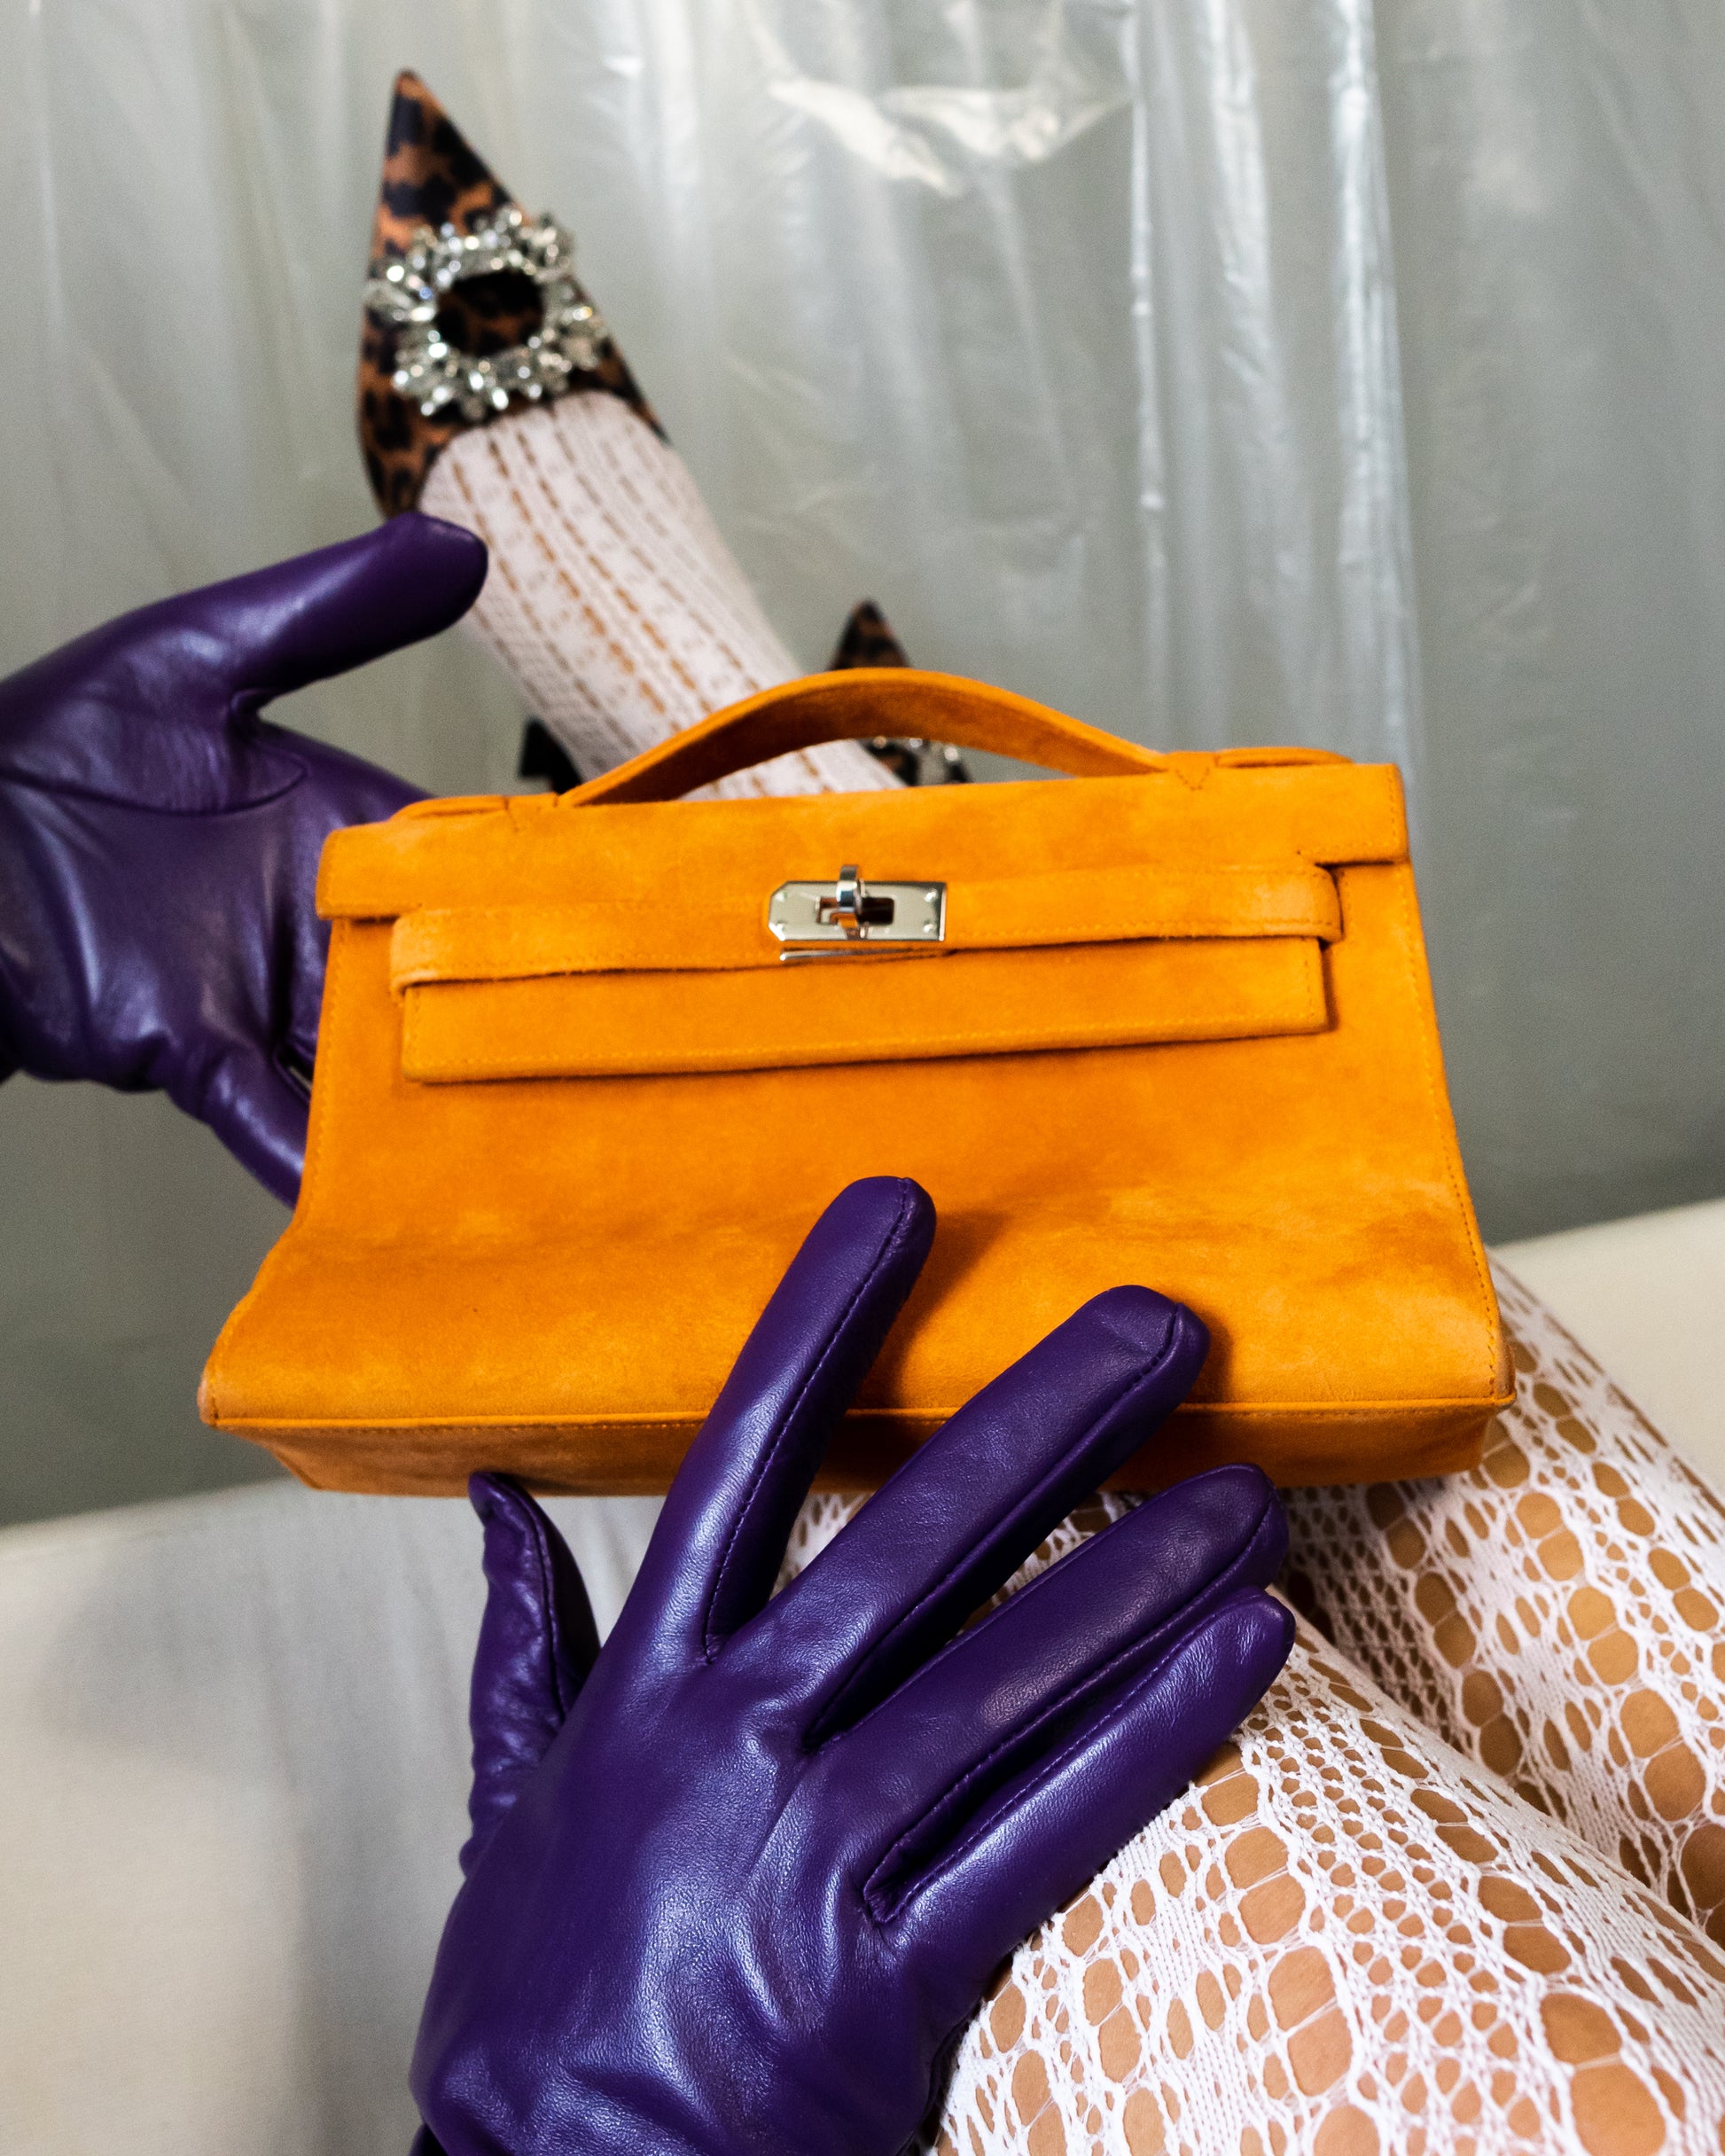 Hermes Kelly 20 cm small model handbag in purple leather